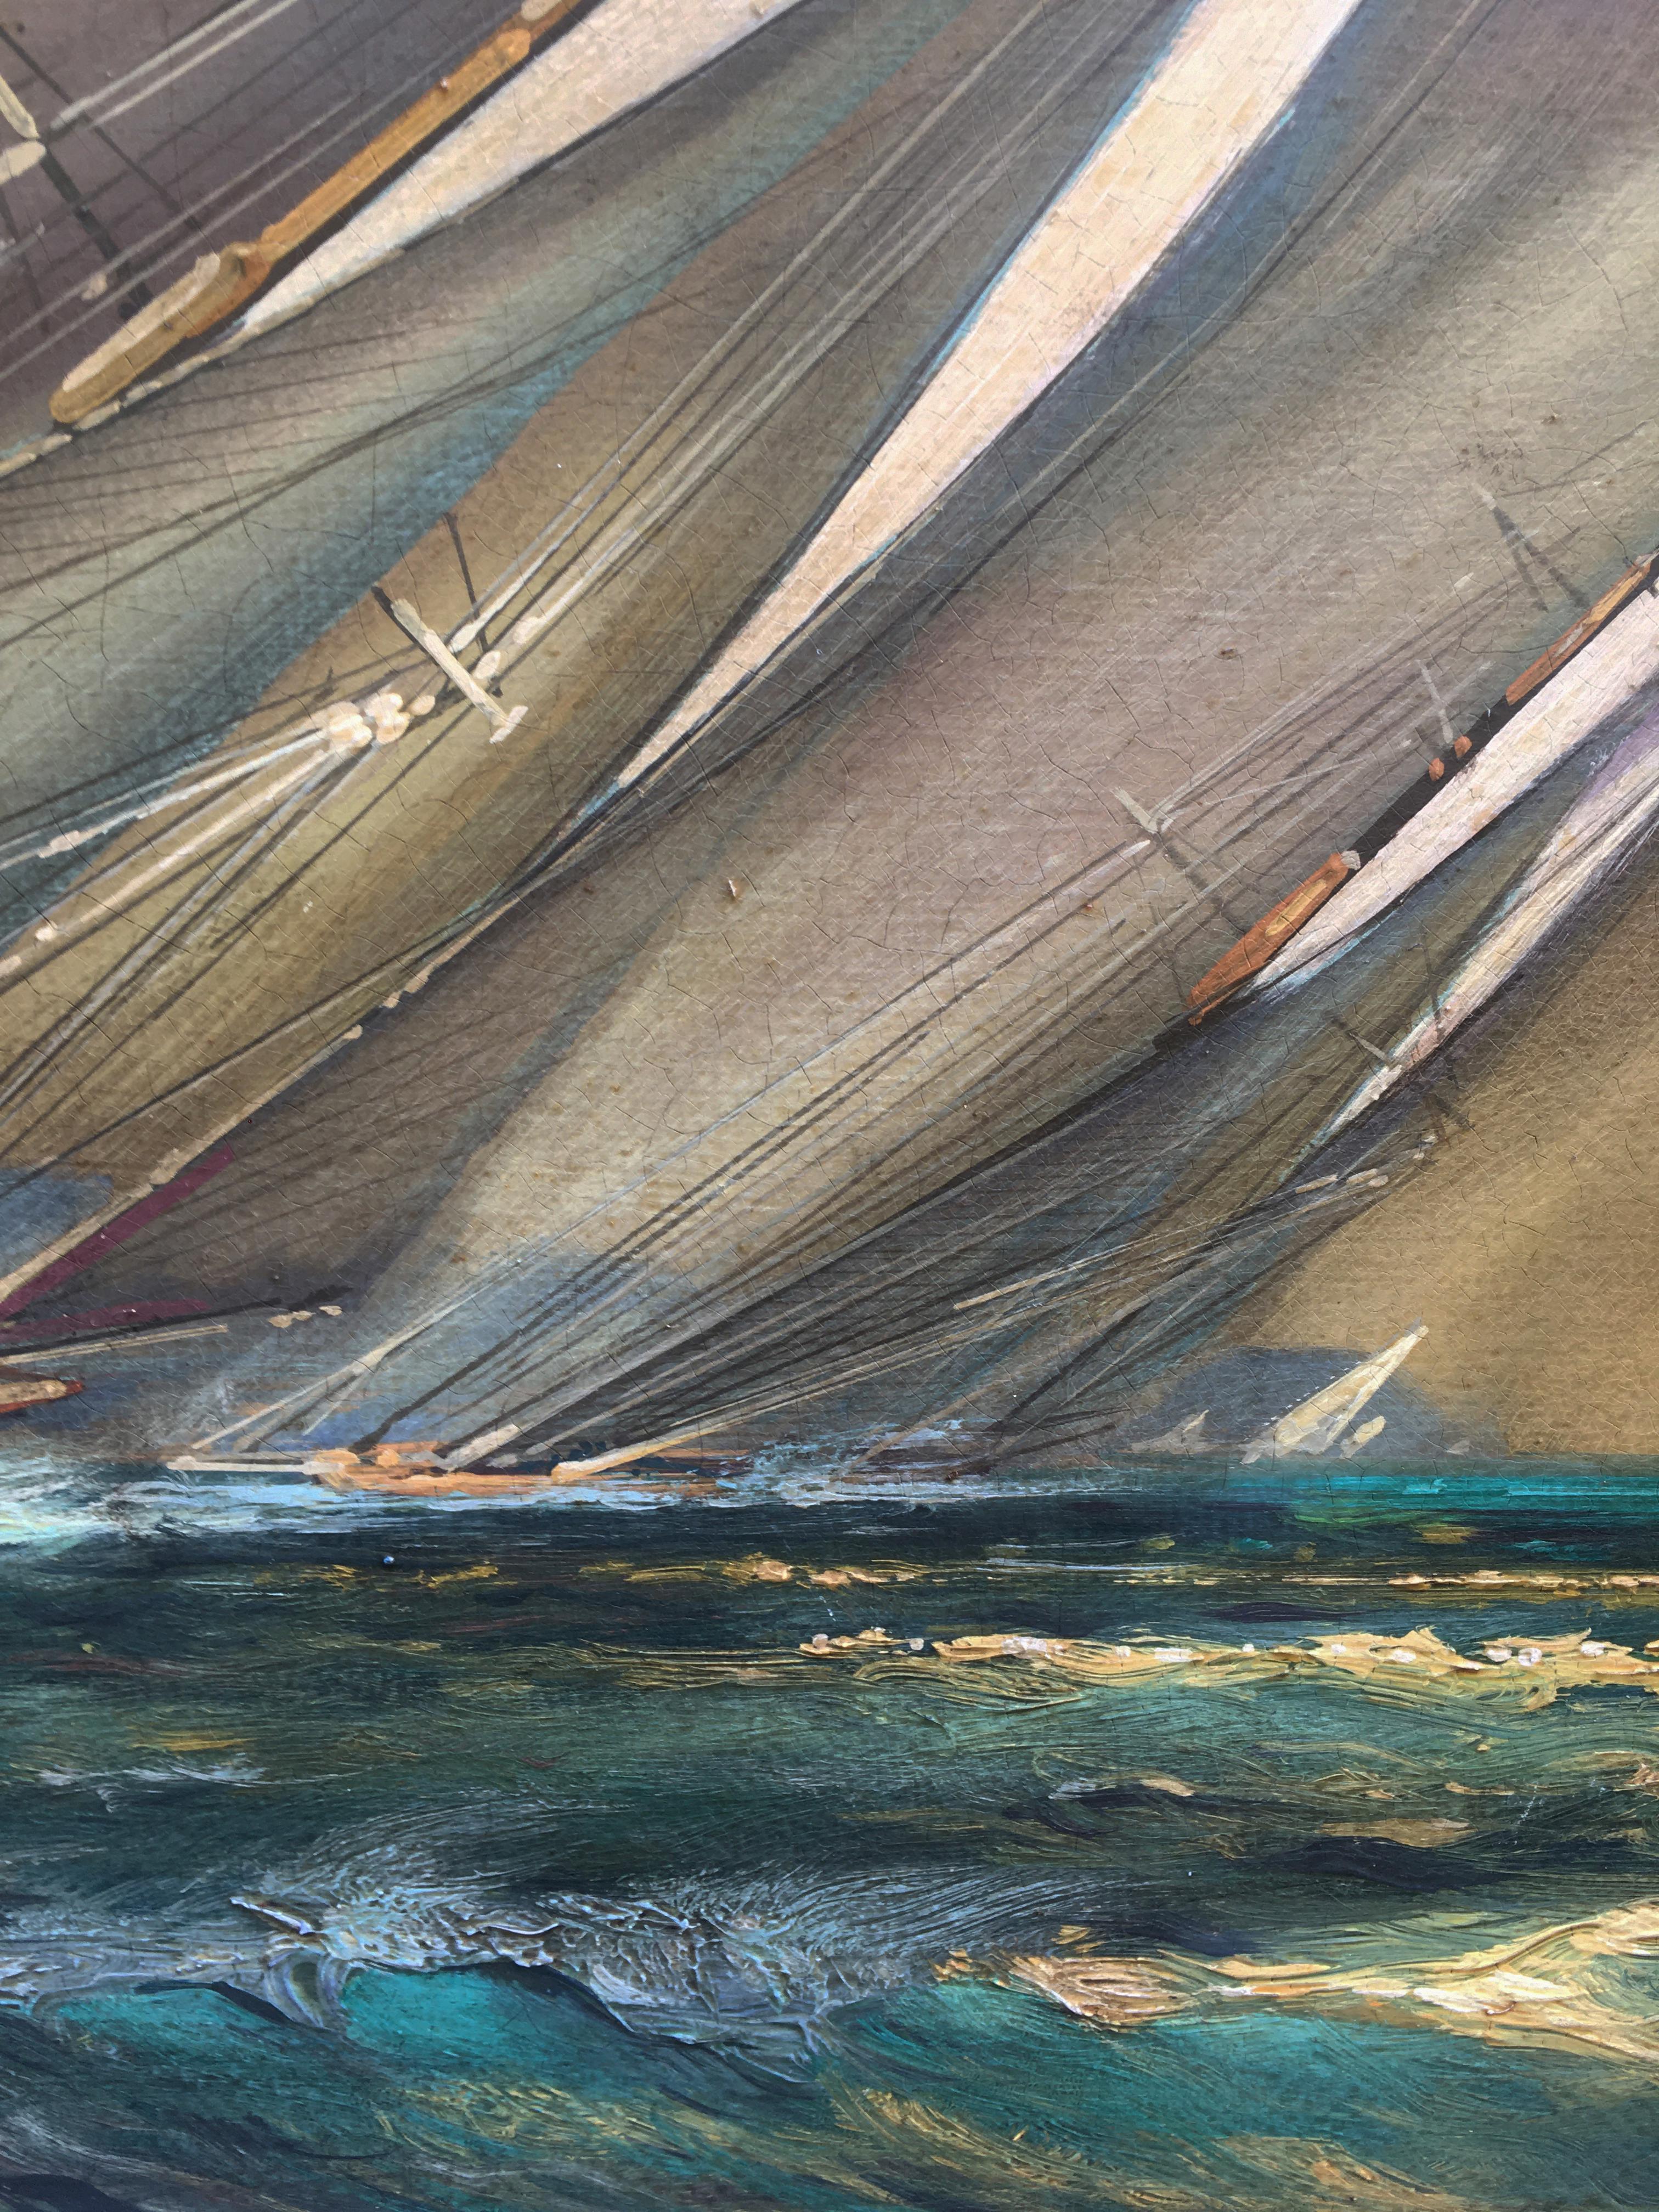 REGATTA IN THE GULF - John Stevens Italian sealing boat oil on canvas painting 1